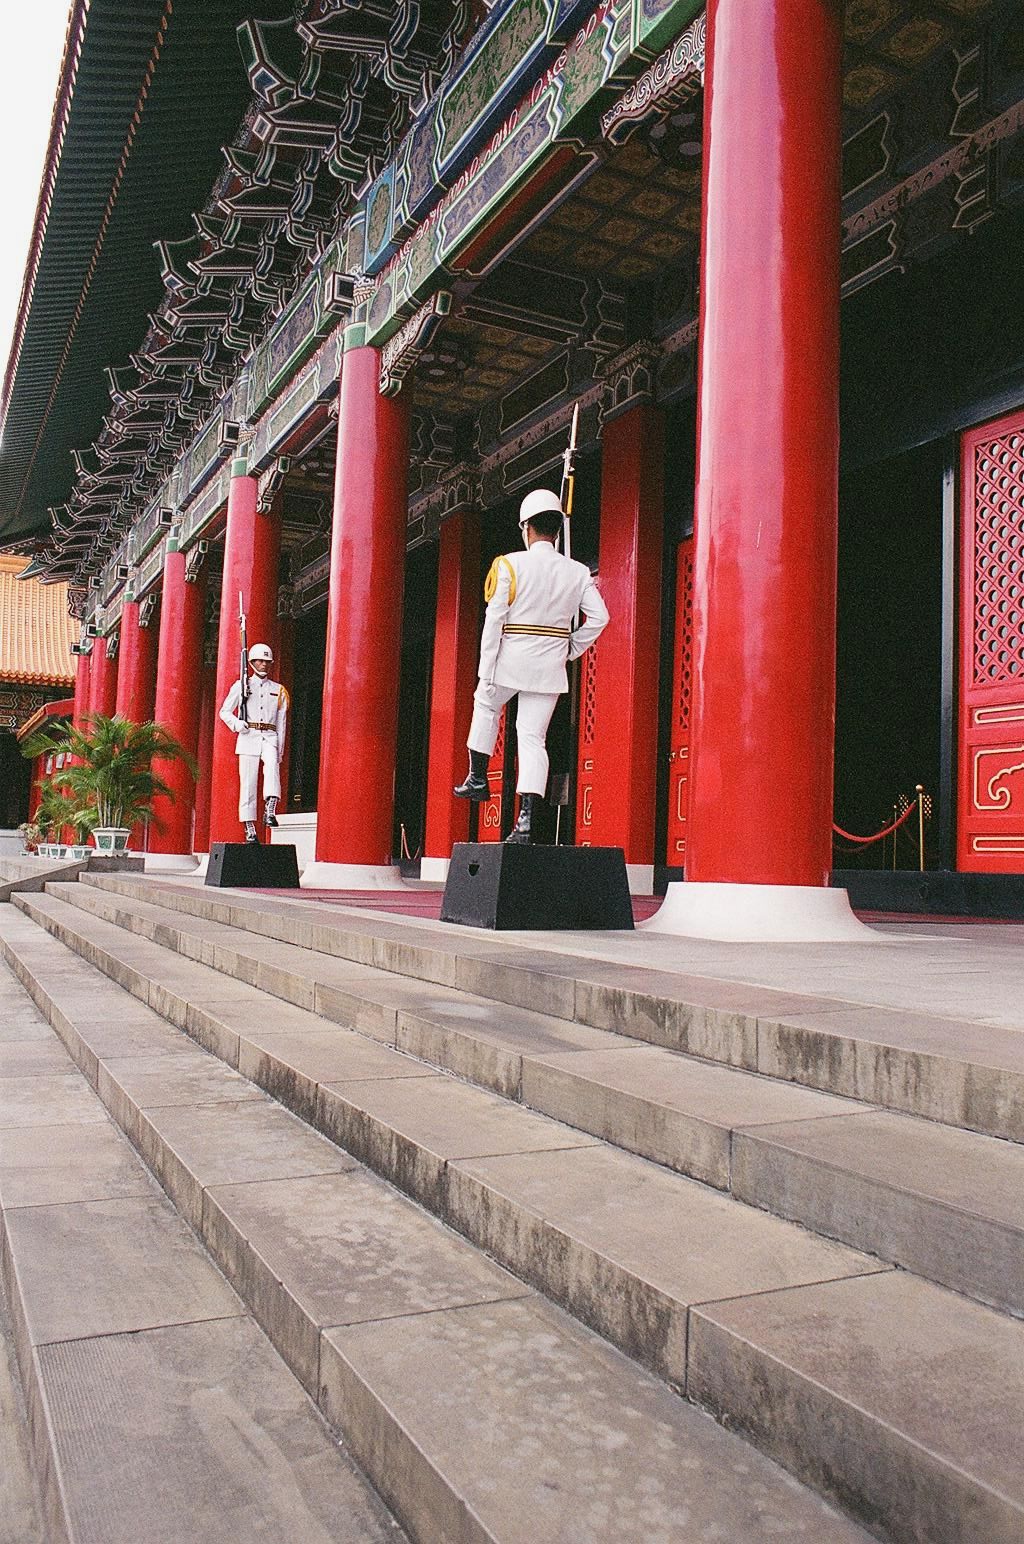 fotka / image pamatnik padlych, vojenske muzeum, Taipei, Taiwan